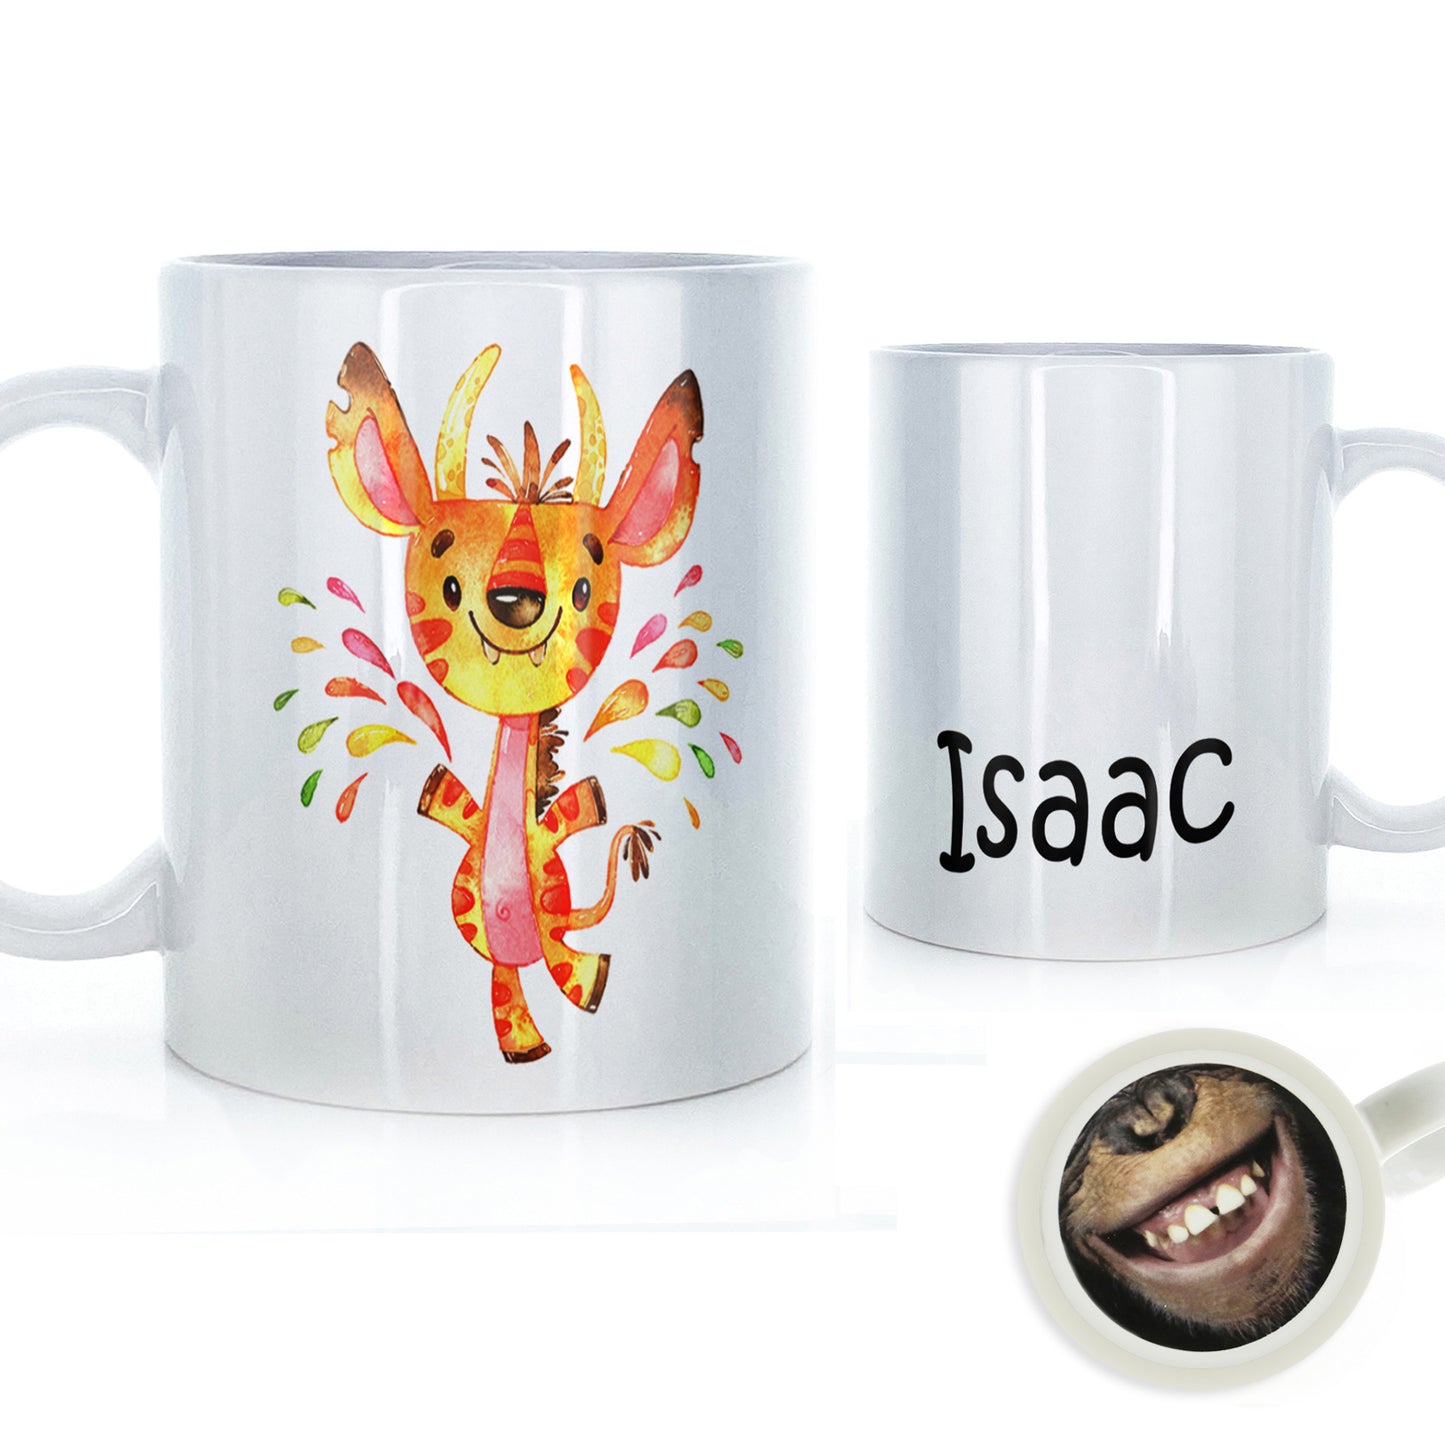 Personalised Mug with Childish Text and Horned Orange Splatter Monster